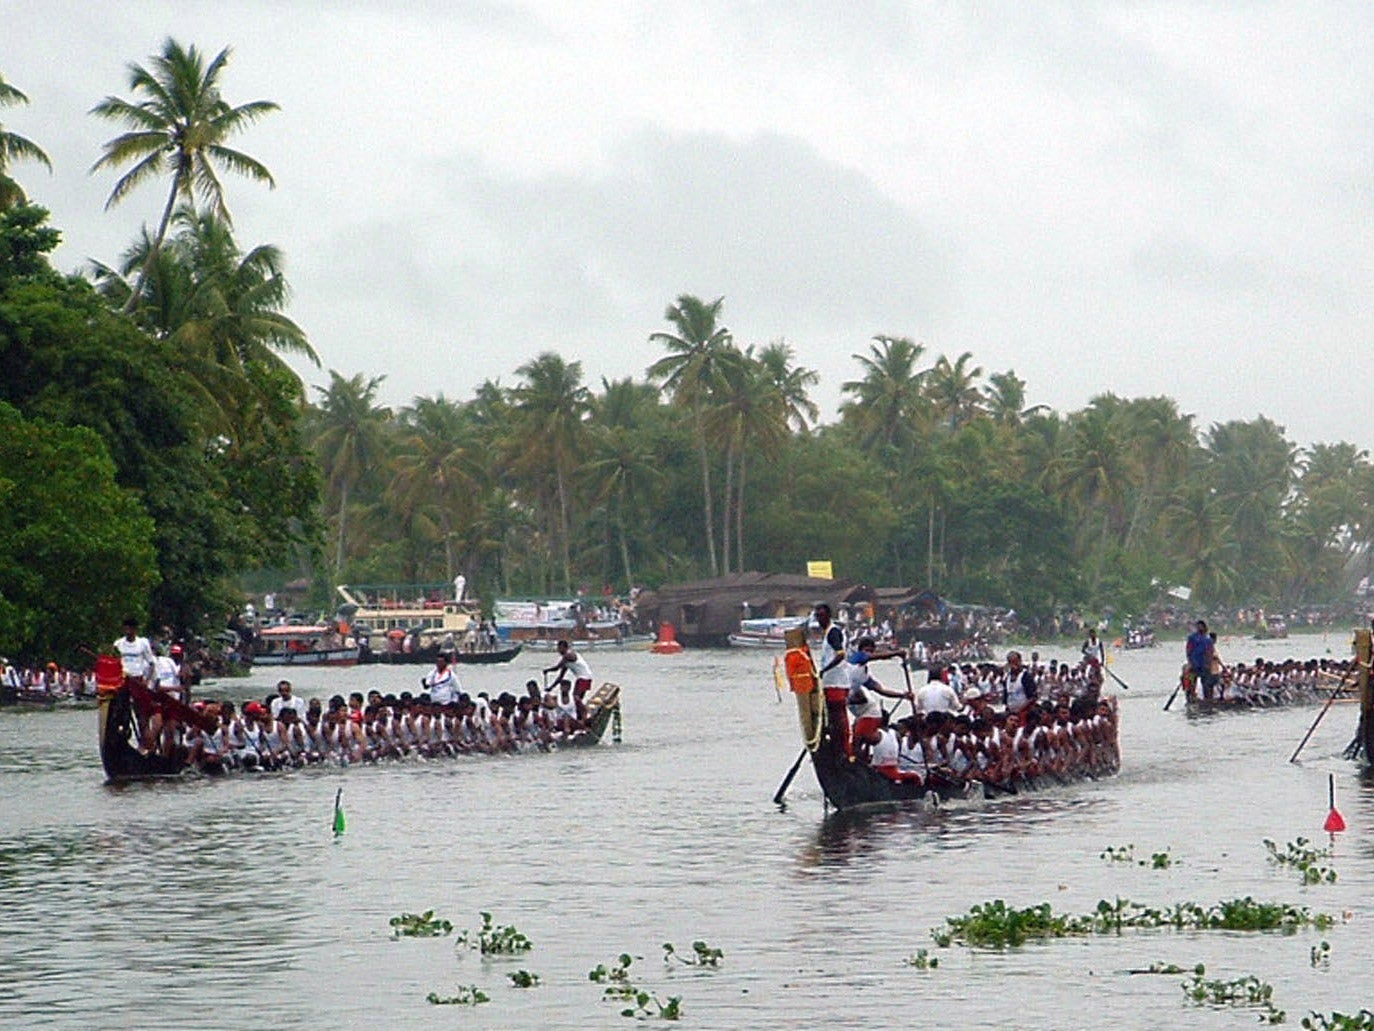 Indian oarsmen and women prepare to take part in the Nehru Boat Races in Alleppy, Kerala